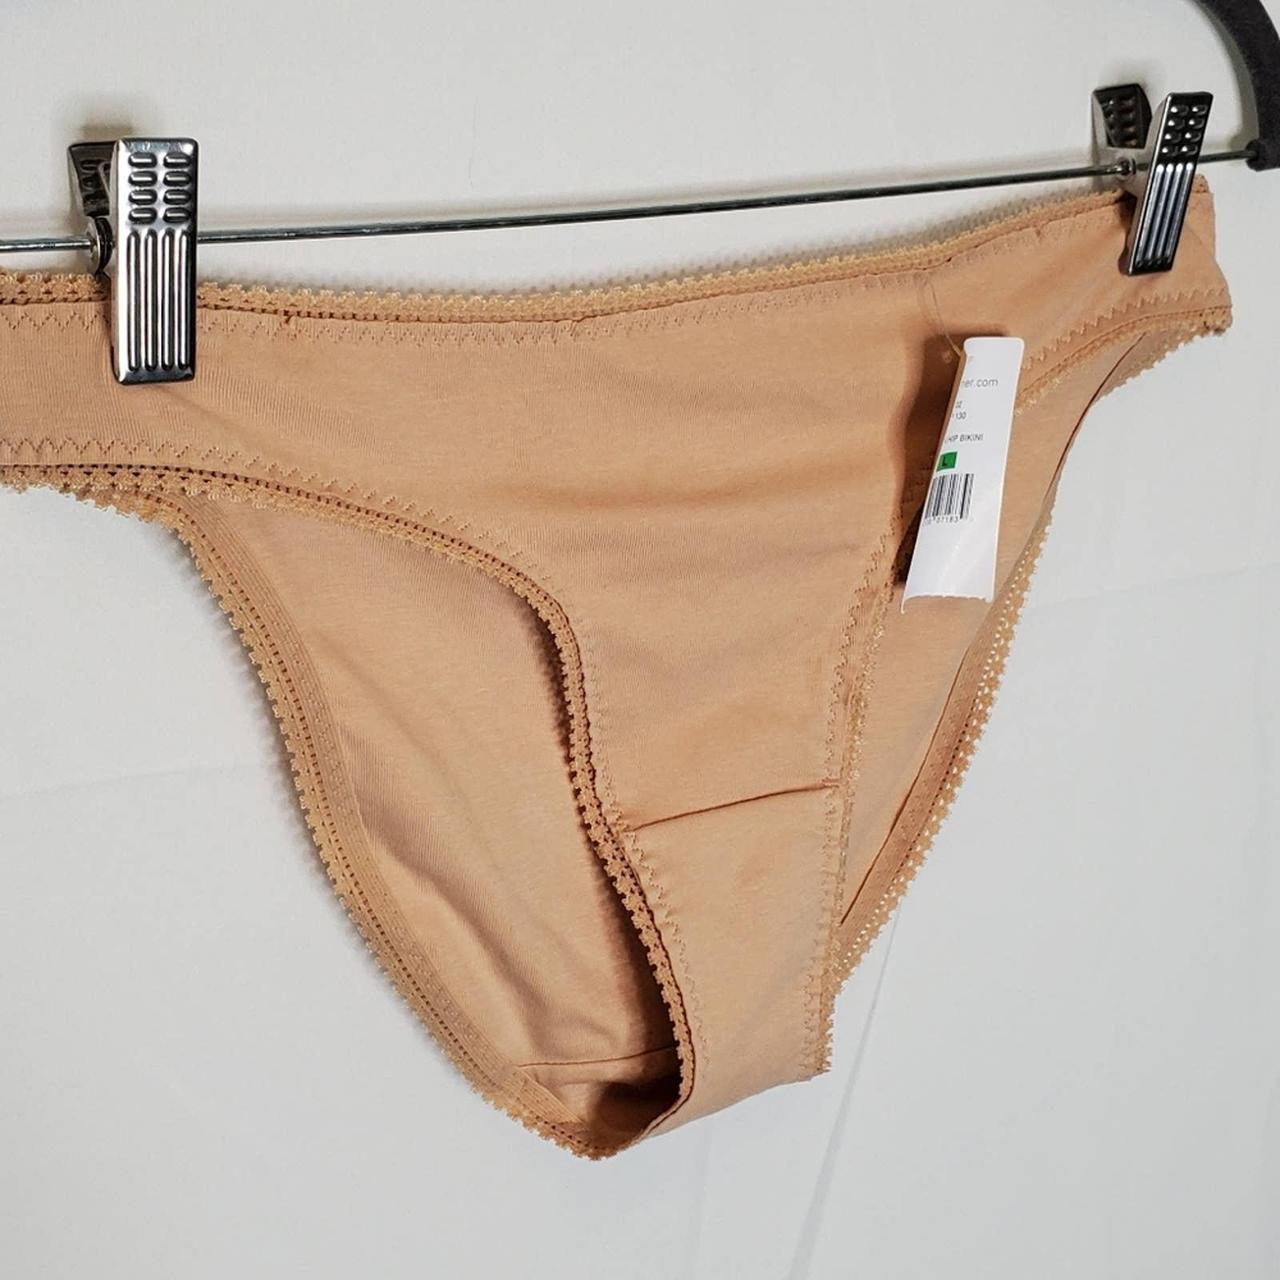 OnGossamer Tan Women's Panties & Underwear